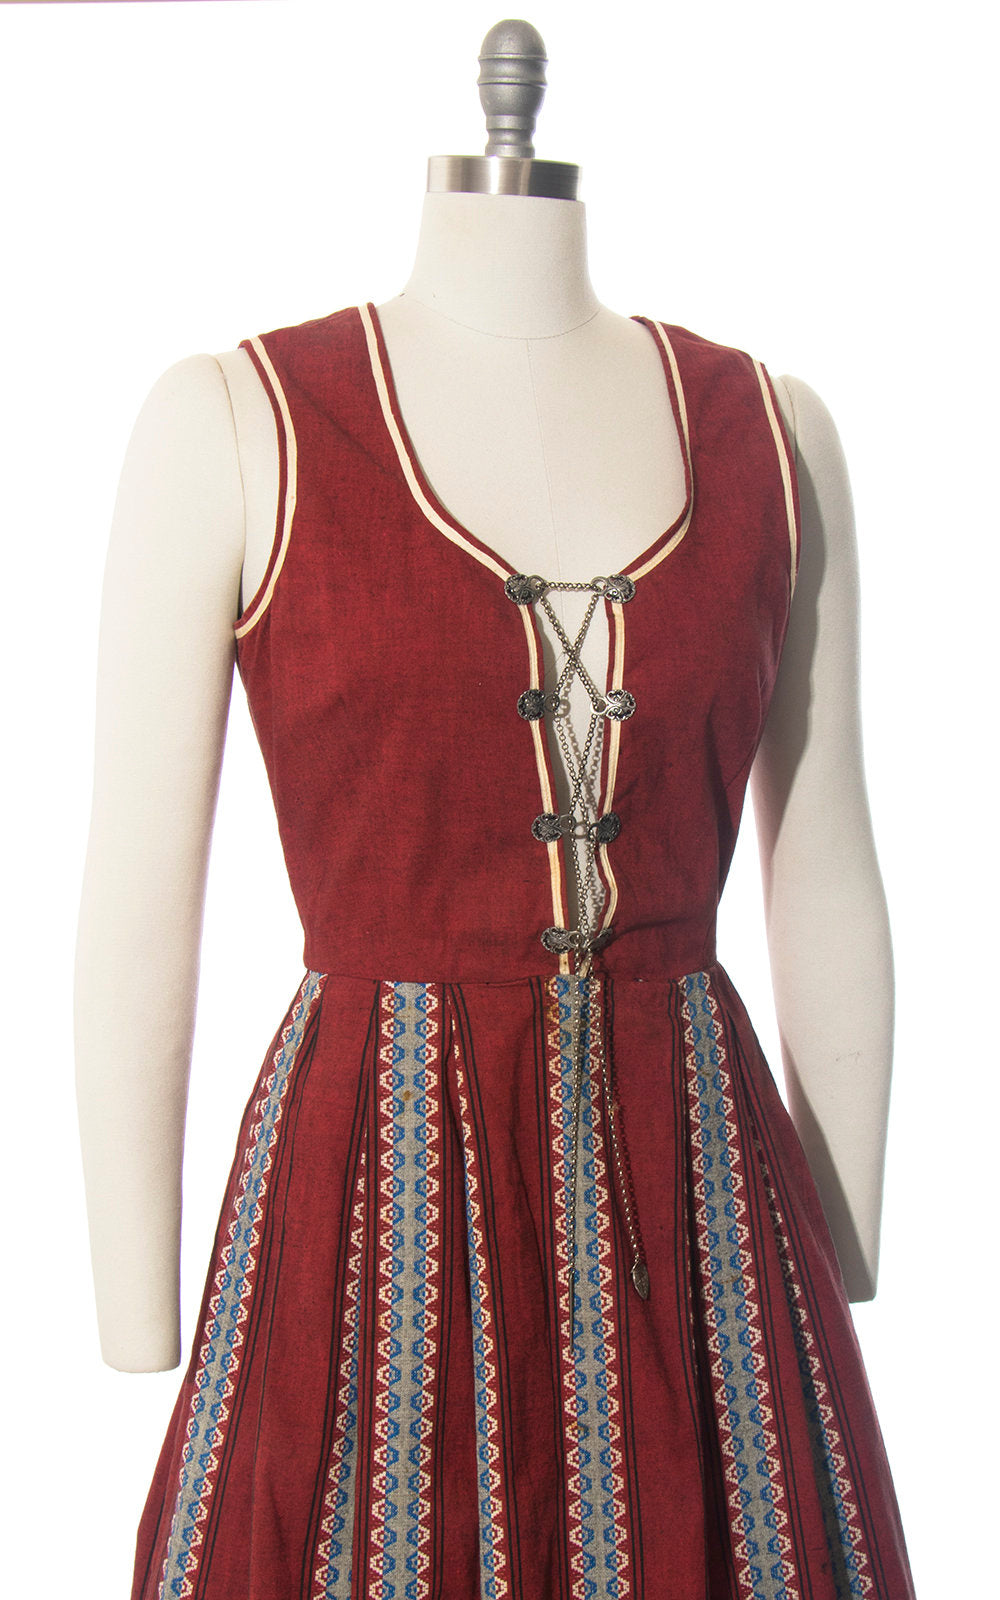 Vintage 1950s Dirndl Dress | 50s Striped Cotton Sundress Burgundy Lace Up Traditional Oktoberfest Dirndl w/ Attachable Peplum (small)